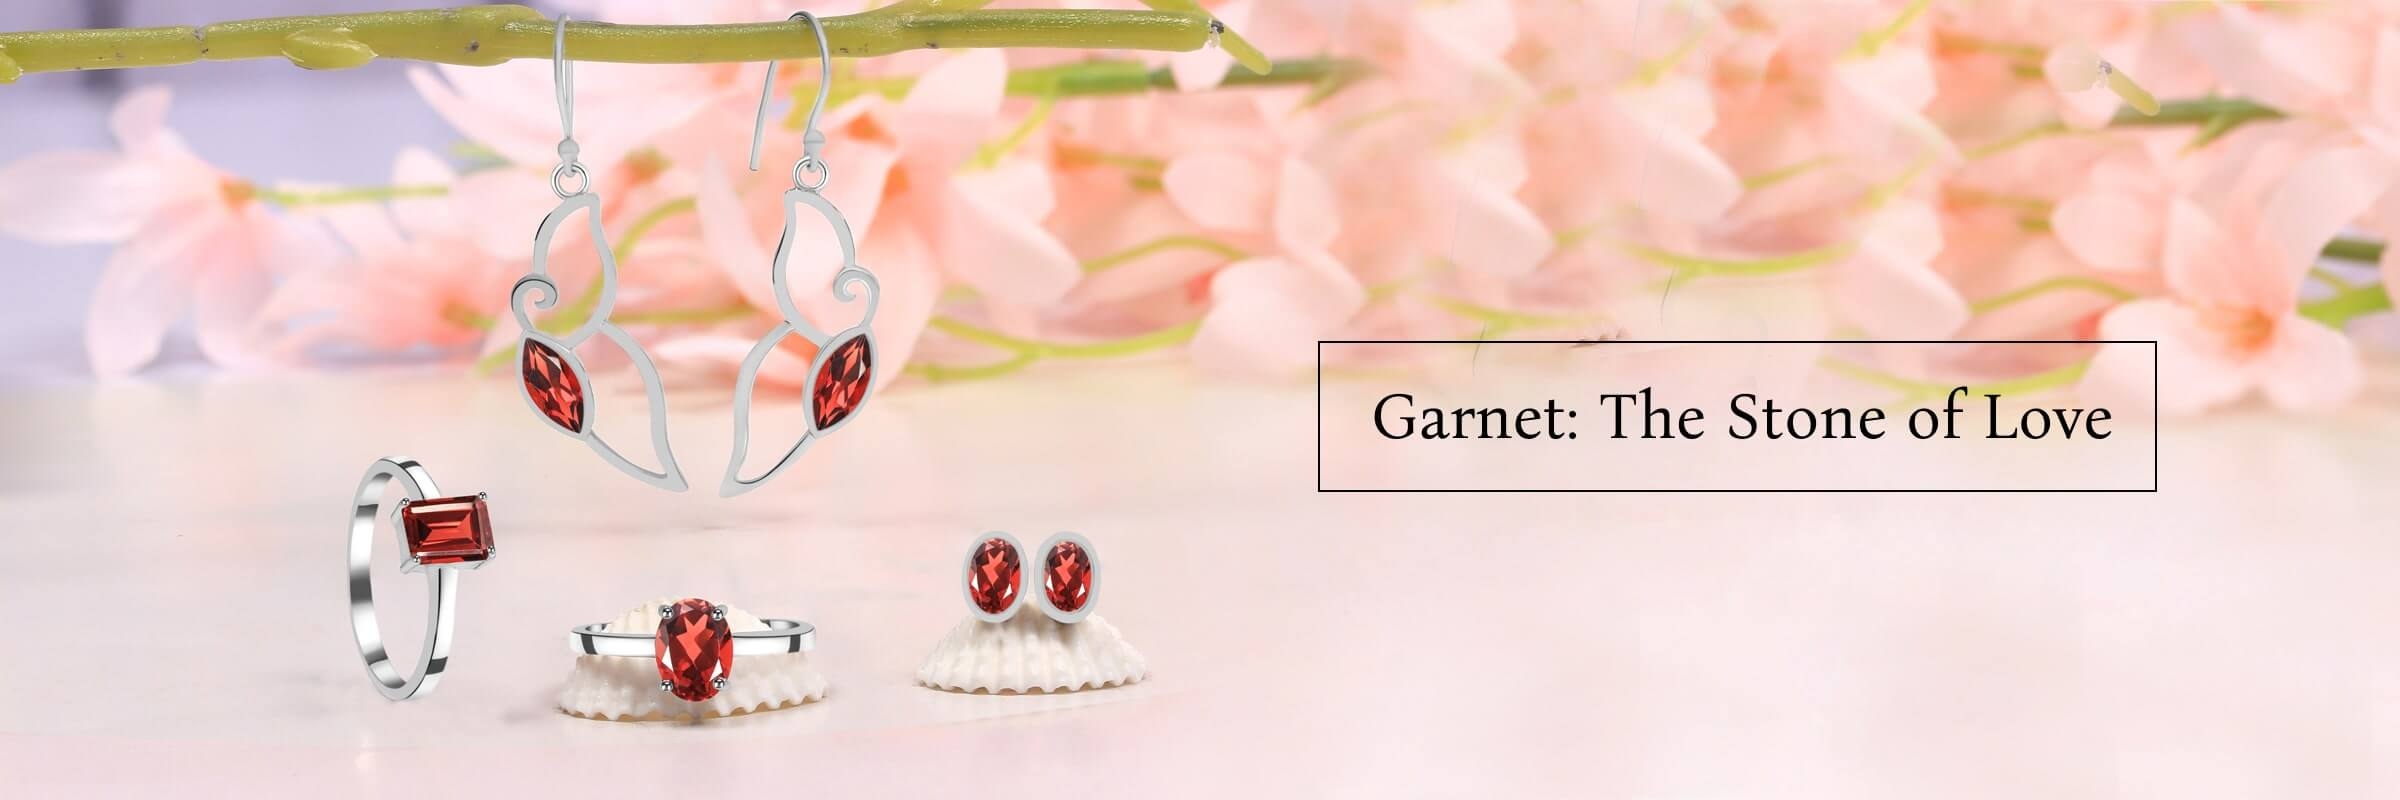 Garnet The stone of love